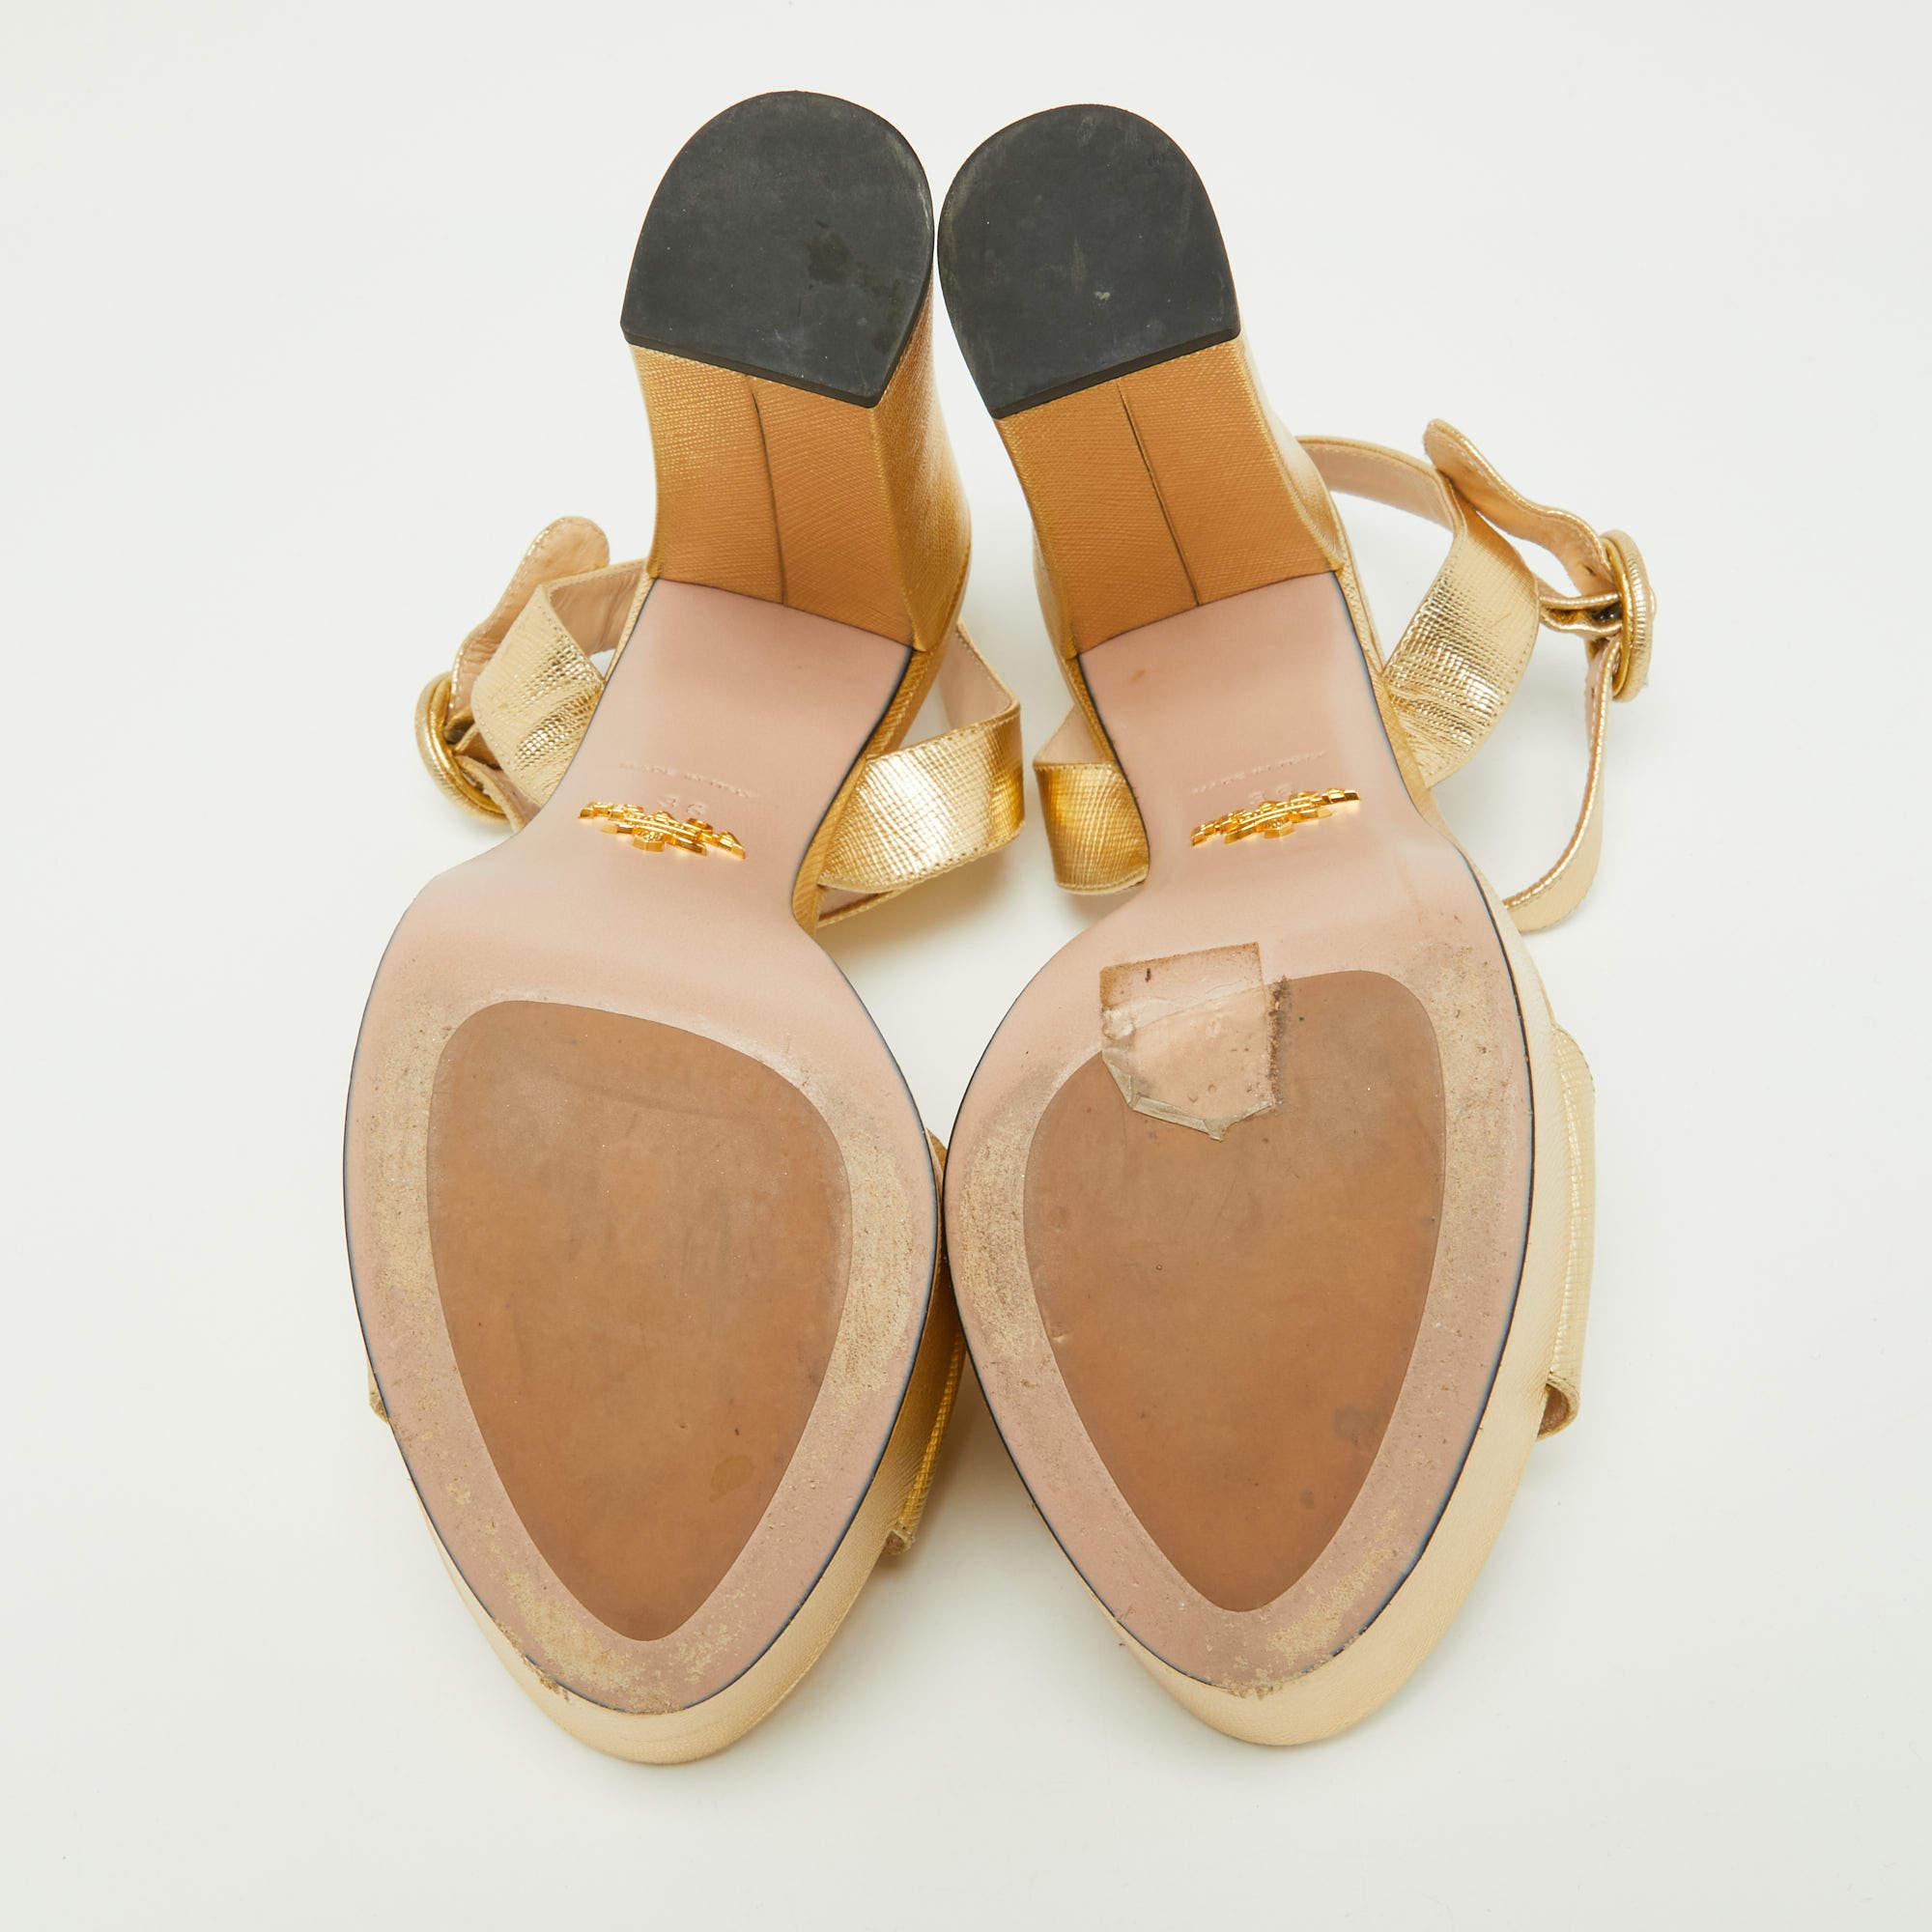 Prada Gold Leather Ankle Strap Block Heel Platform Sandals Size 36 1